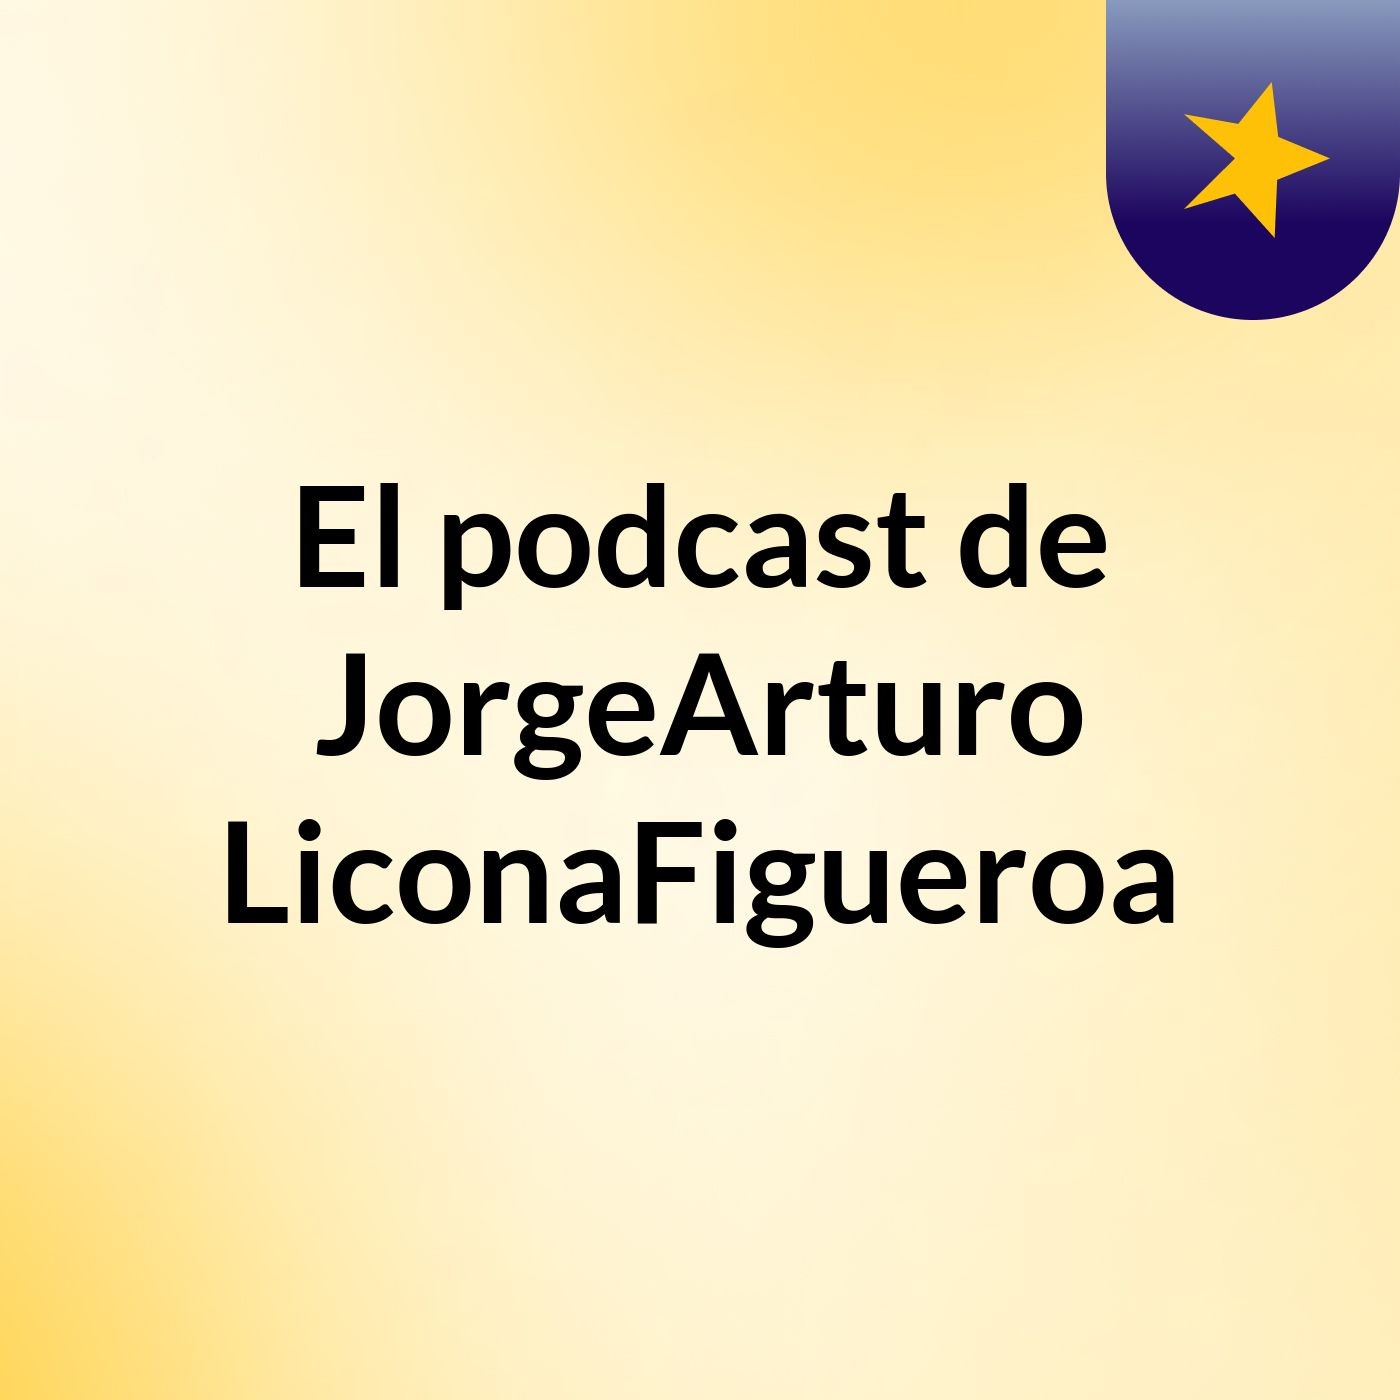 Episodio 1 - El podcast de JorgeArturo LiconaFigueroa